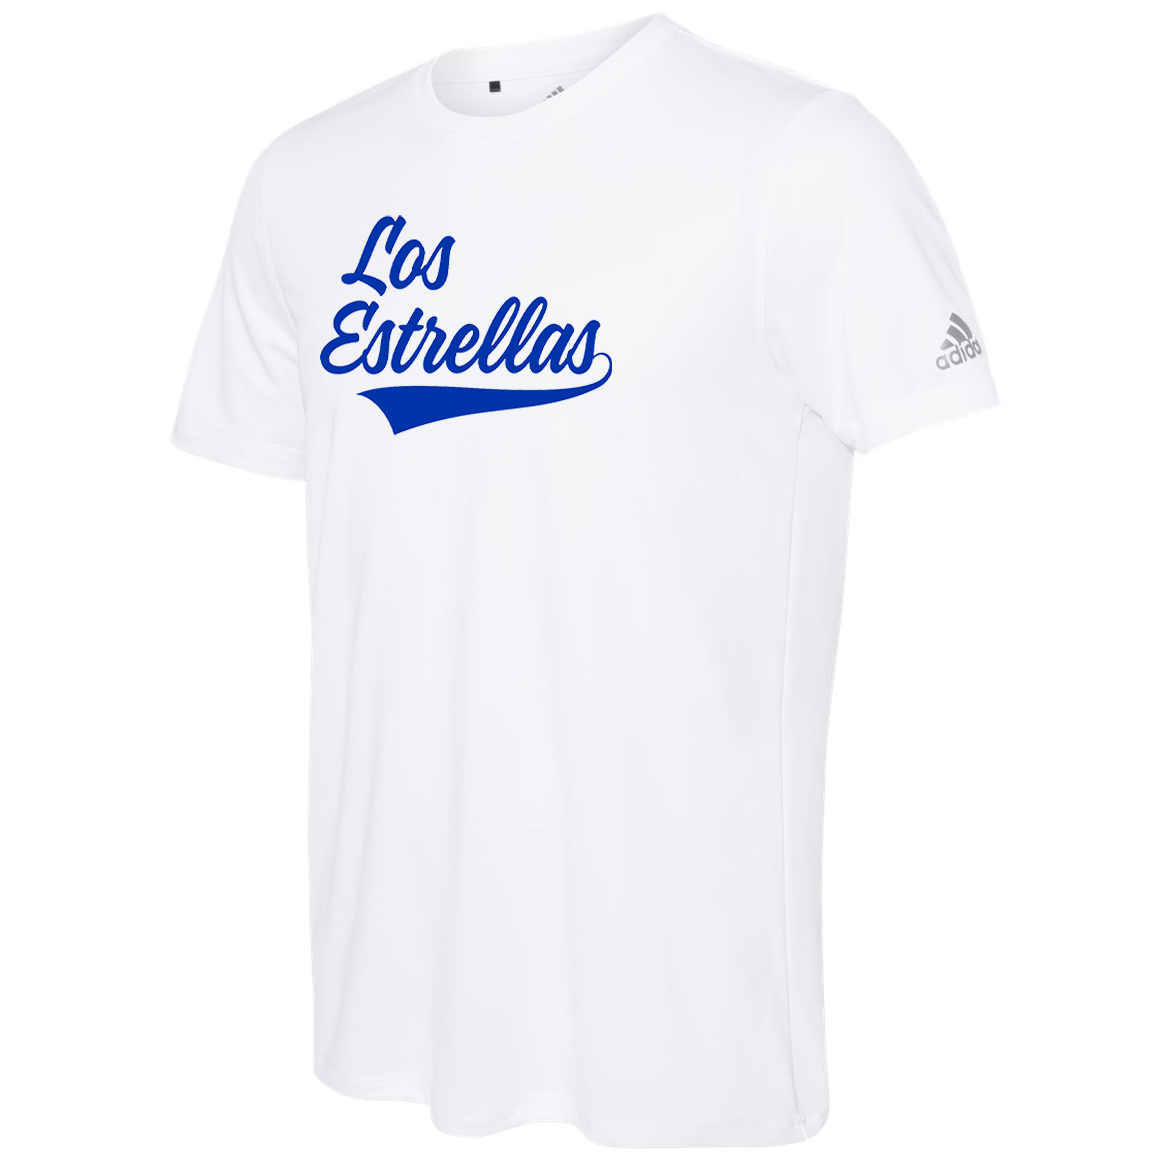 Los Estrellas Adidas Sport T-Shirt